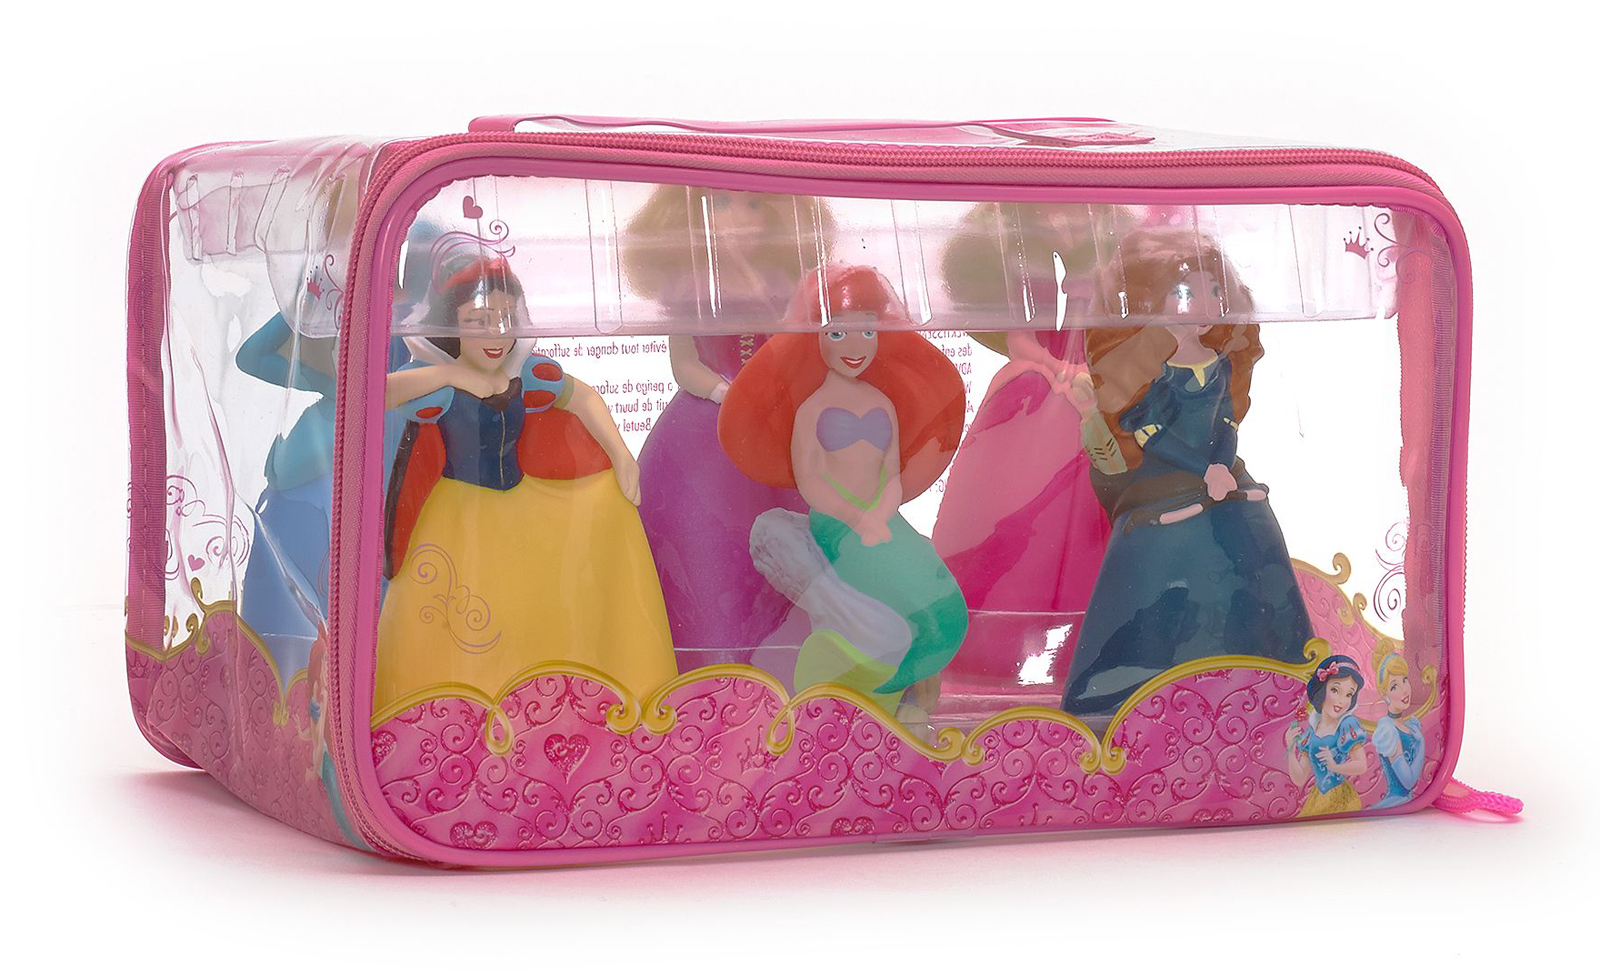 Filmic Light - Snow White Archive: 2015 Euro Princess Bath Toys